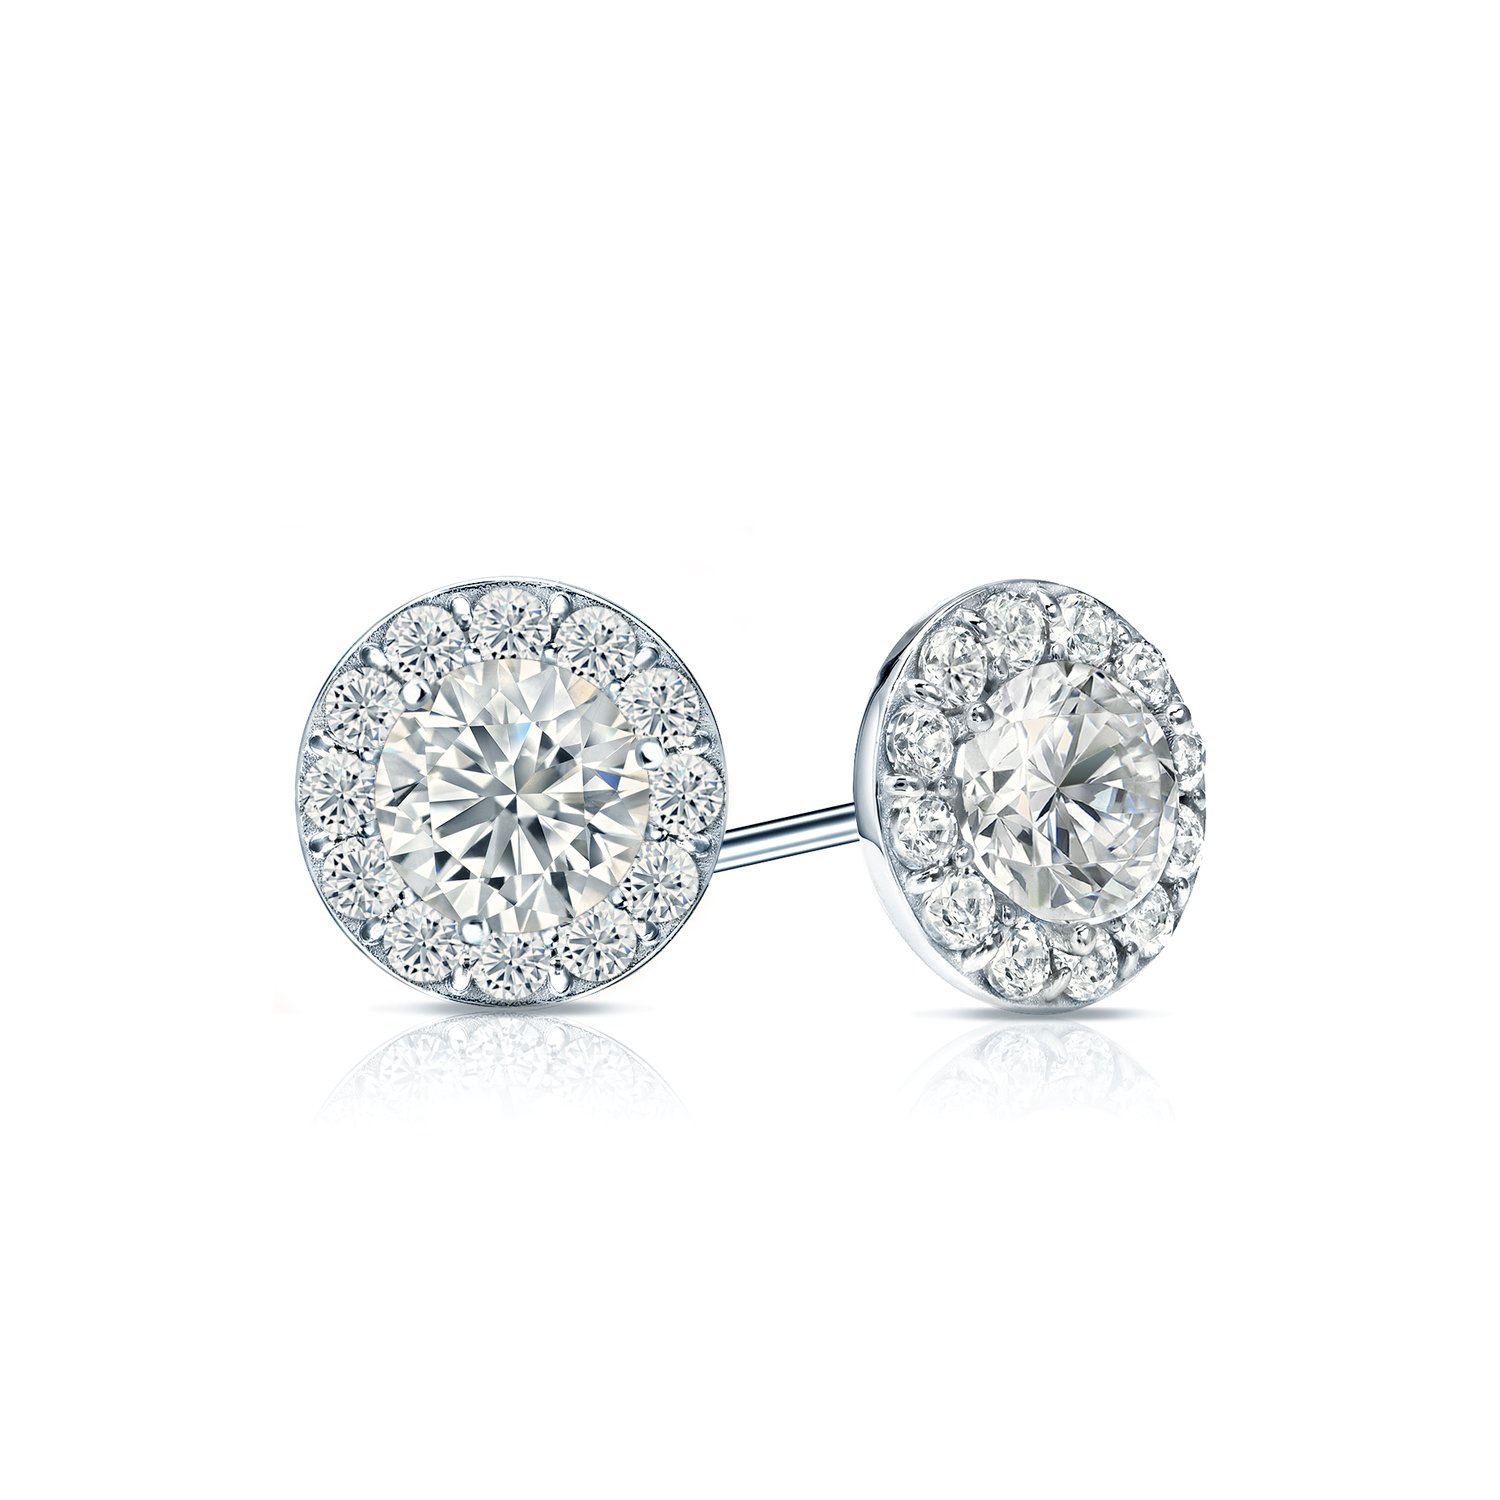 Certified 2.00 cttw Round Diamond Stud Earrings in Platinum Halo